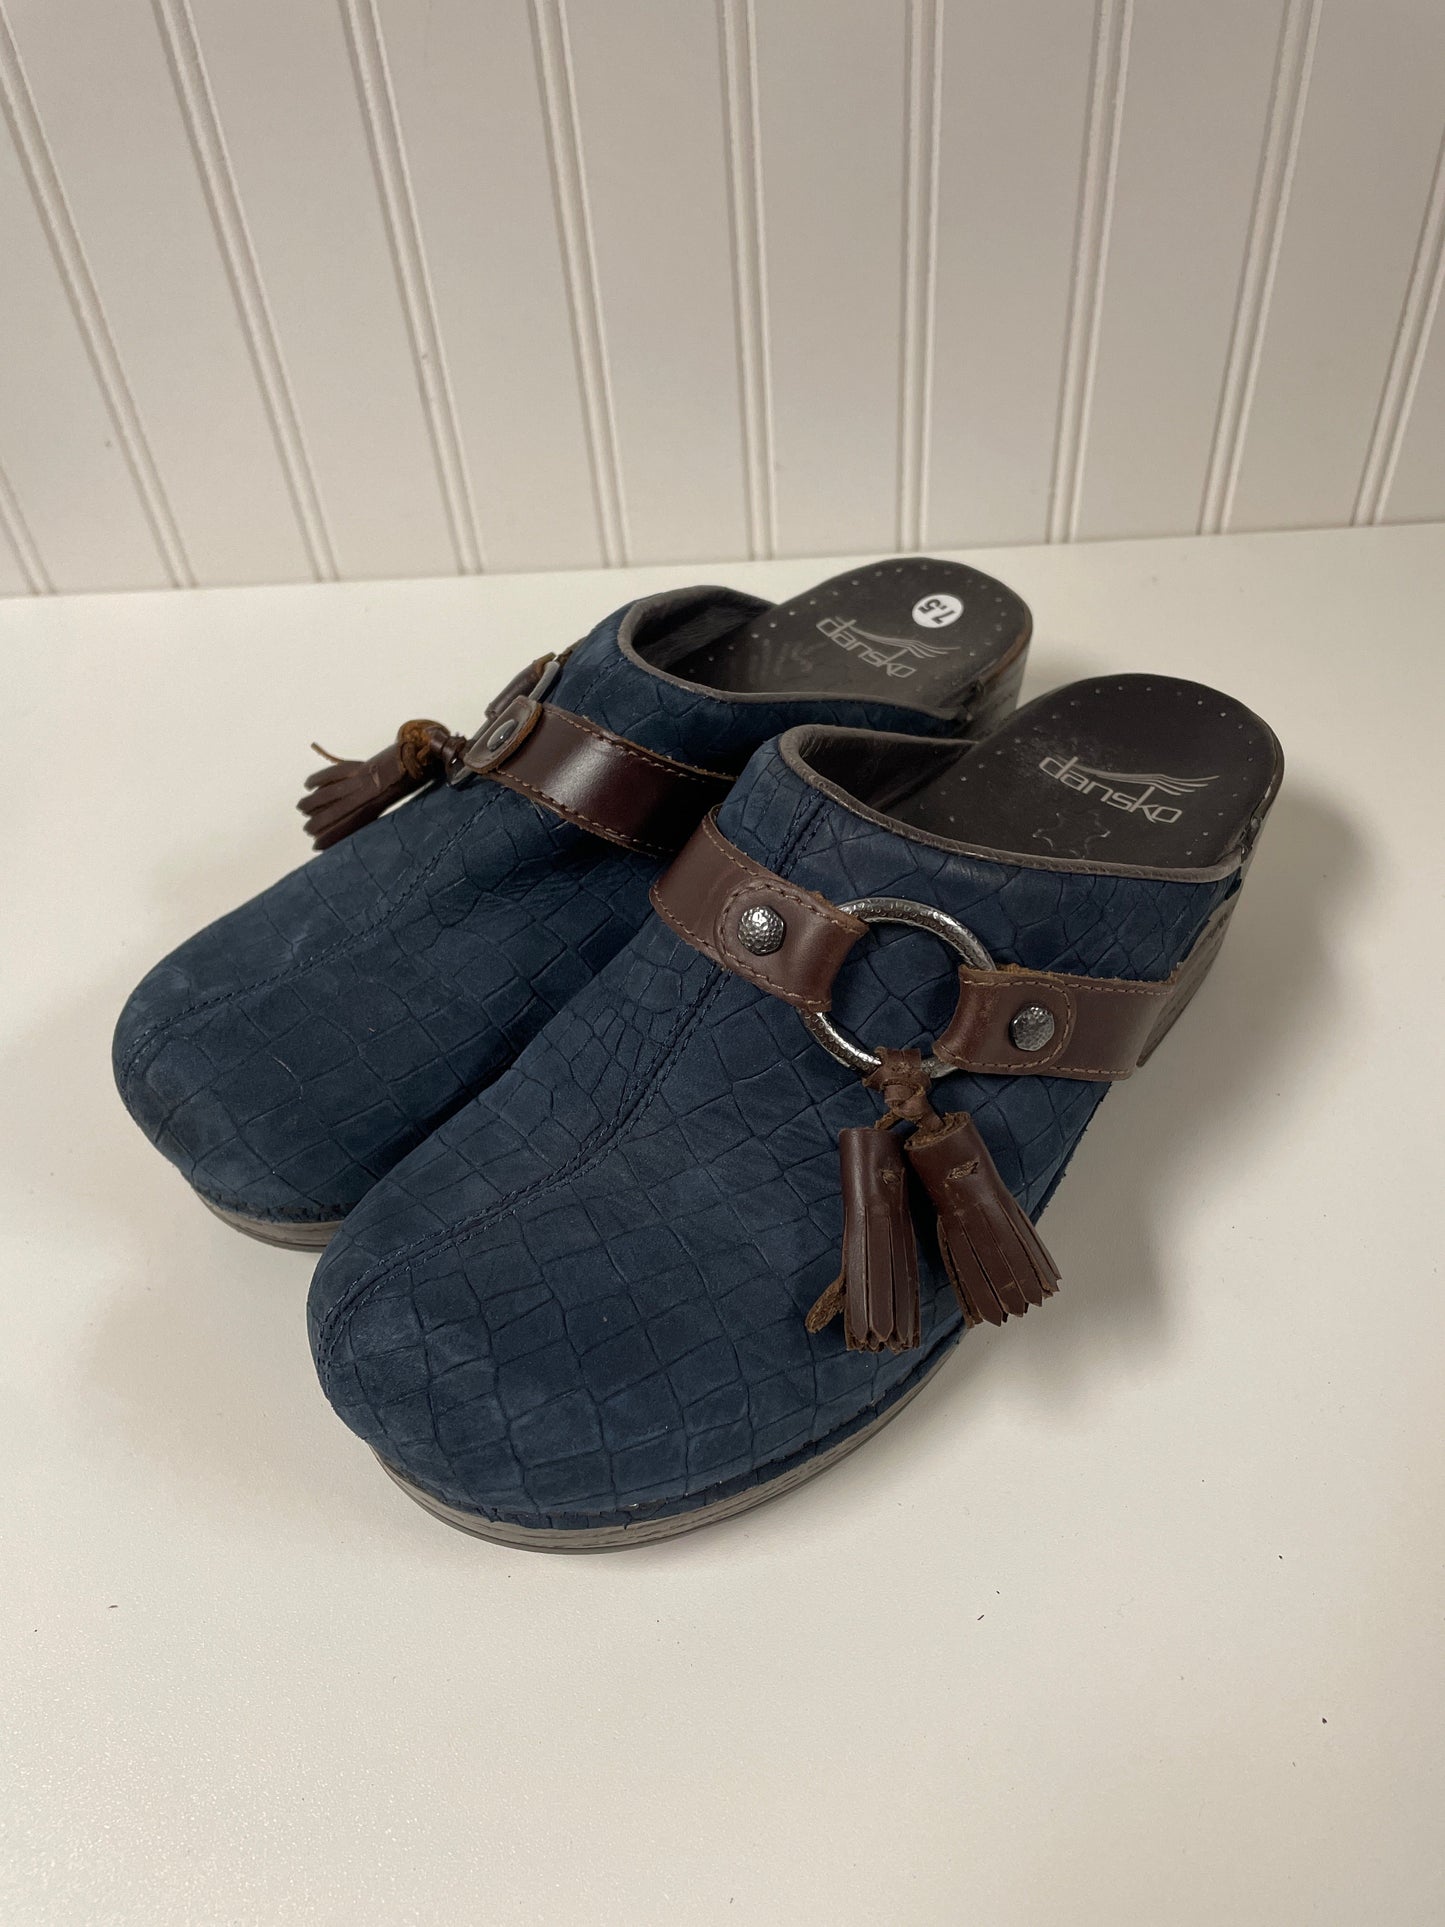 Sandals Flats By Dansko  Size: 7.5